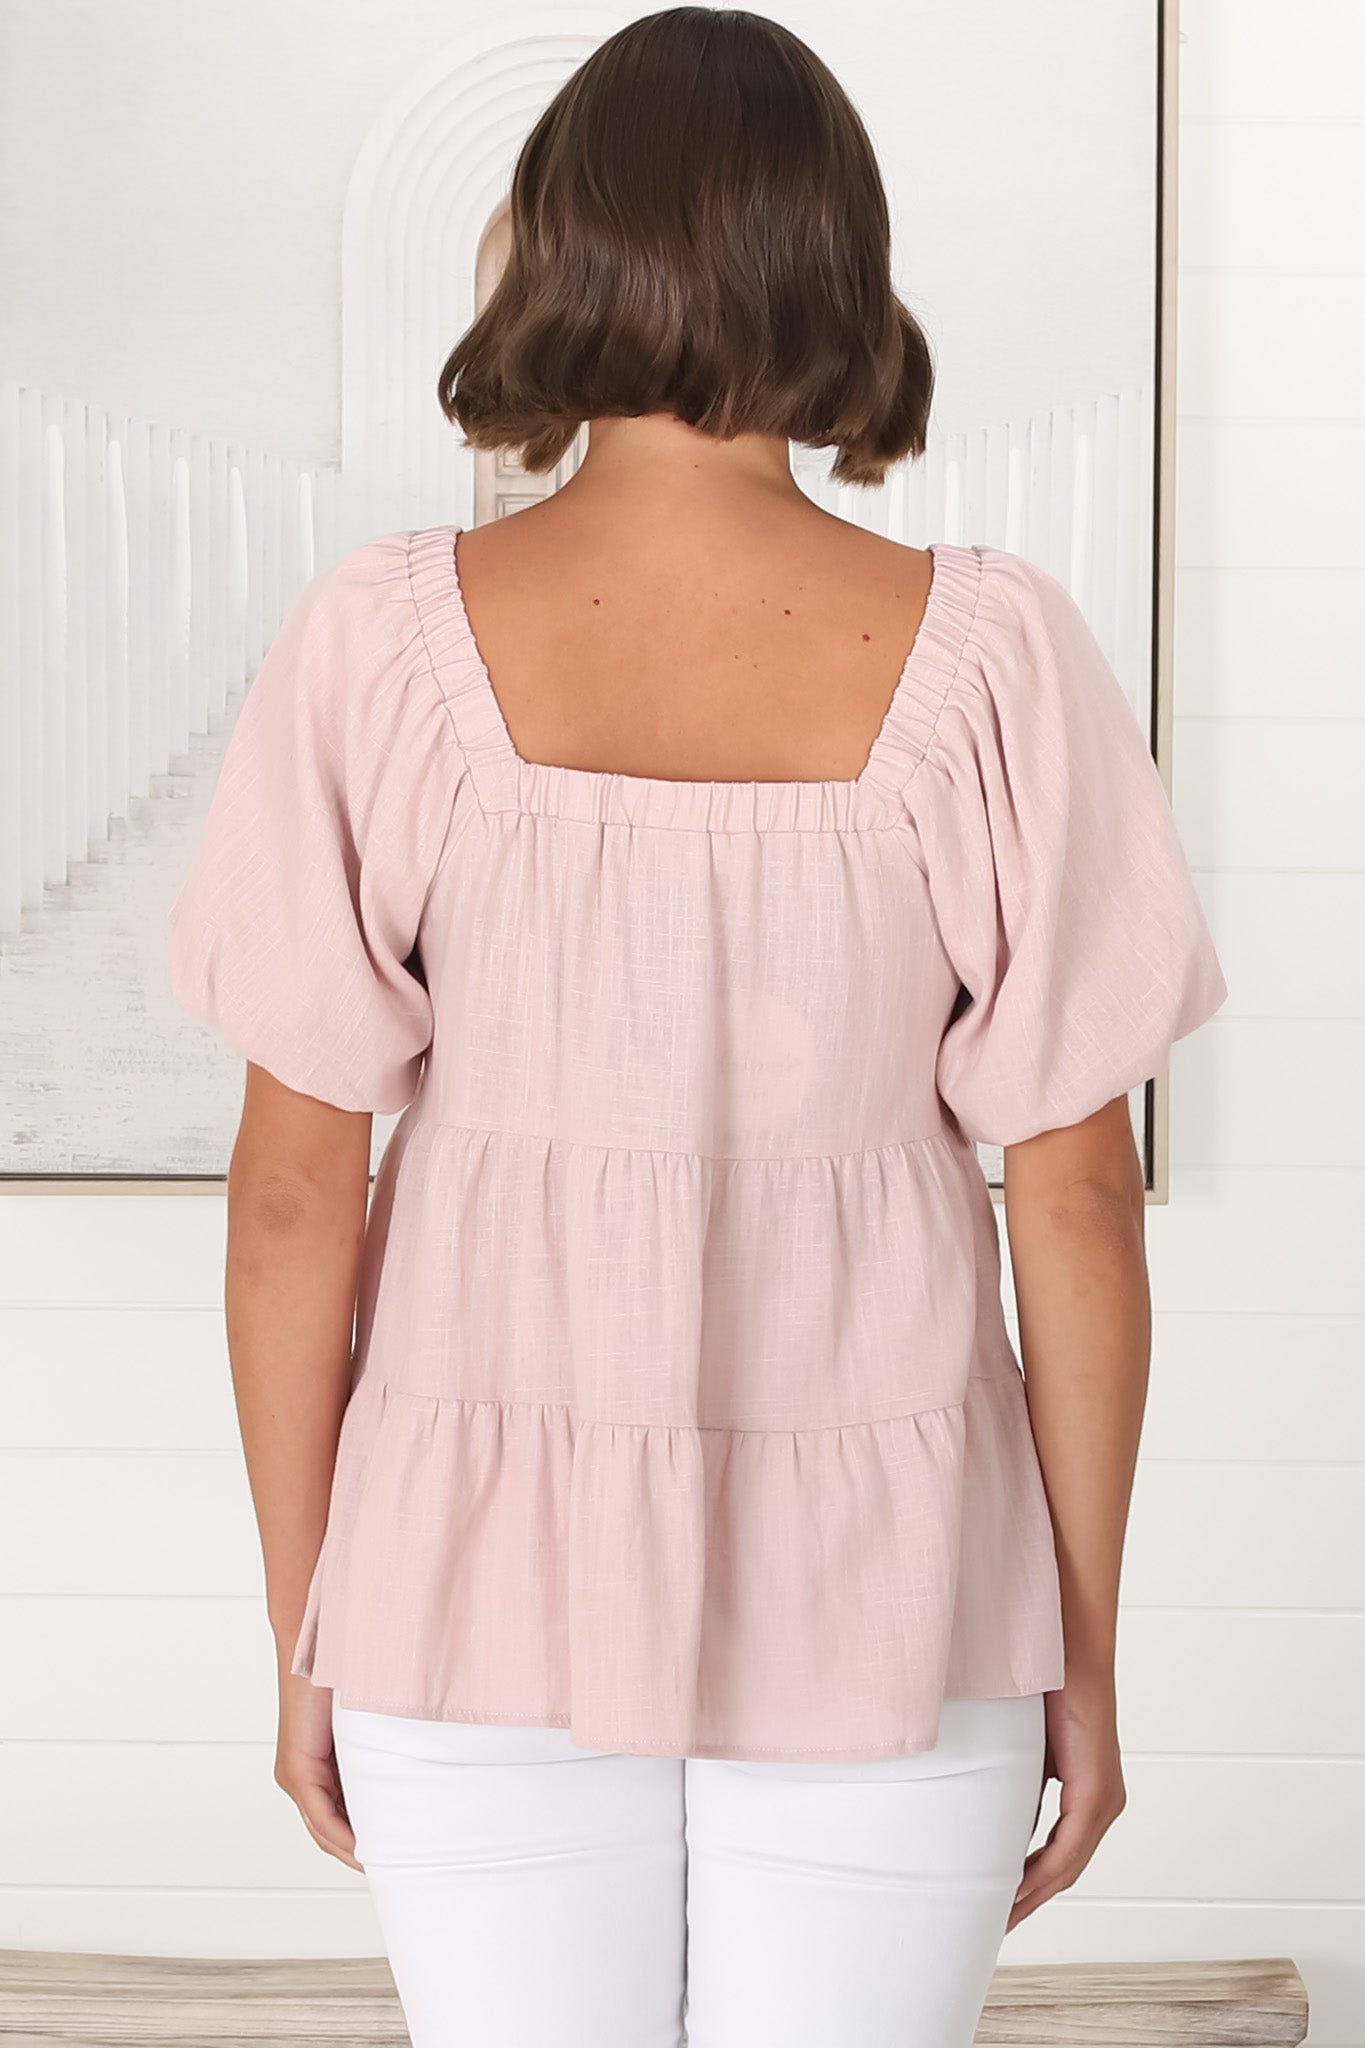 Harlen Top - On or Off Shoulder Tiered Top in Pink